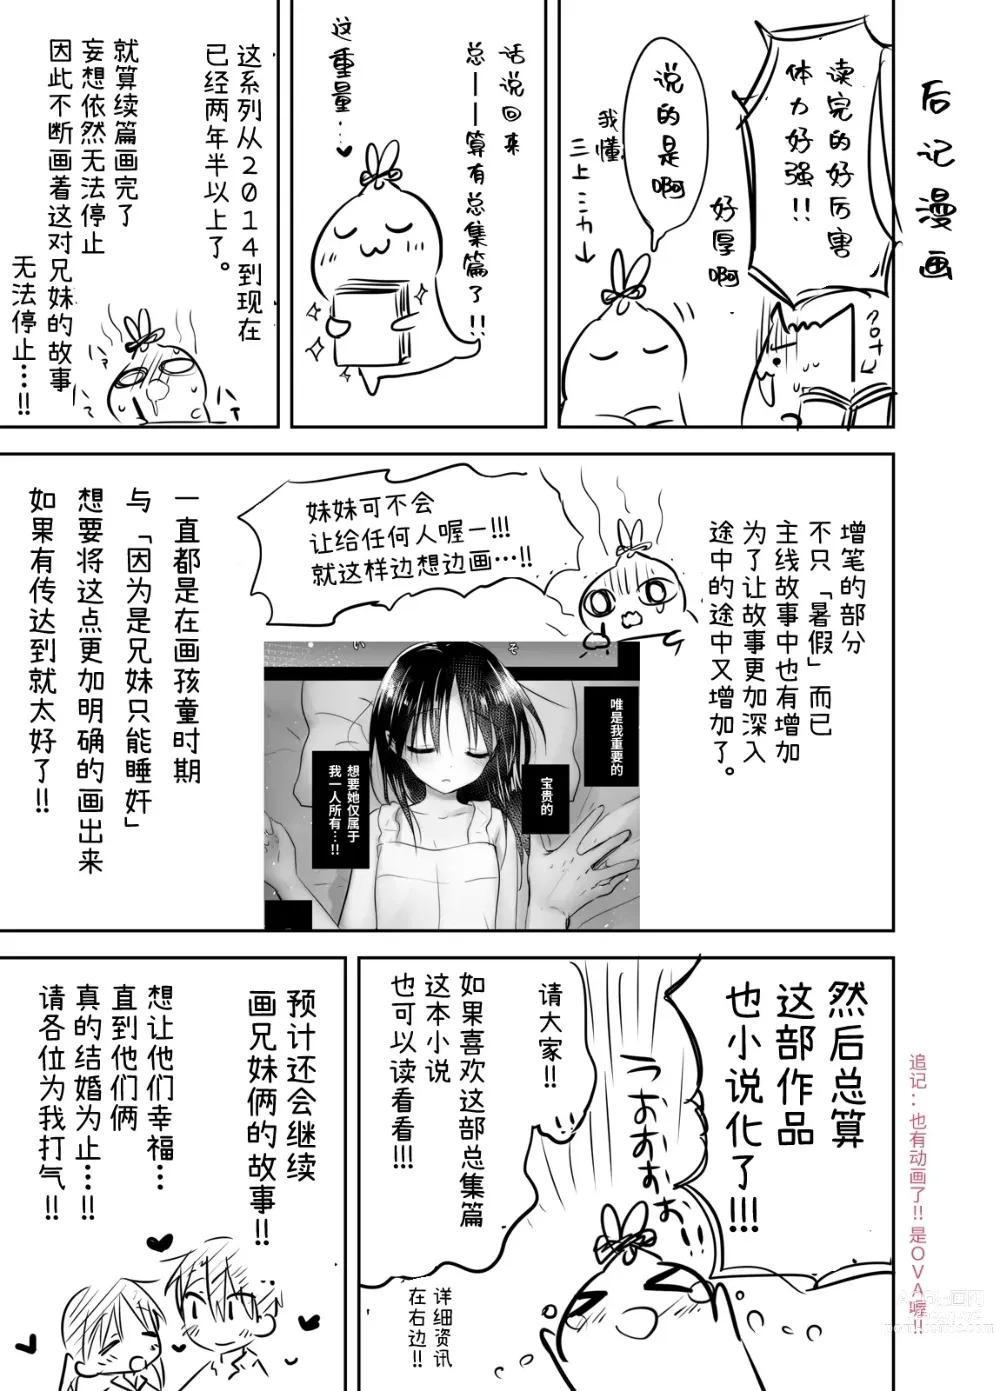 Page 197 of doujinshi 晚安性爱总集篇